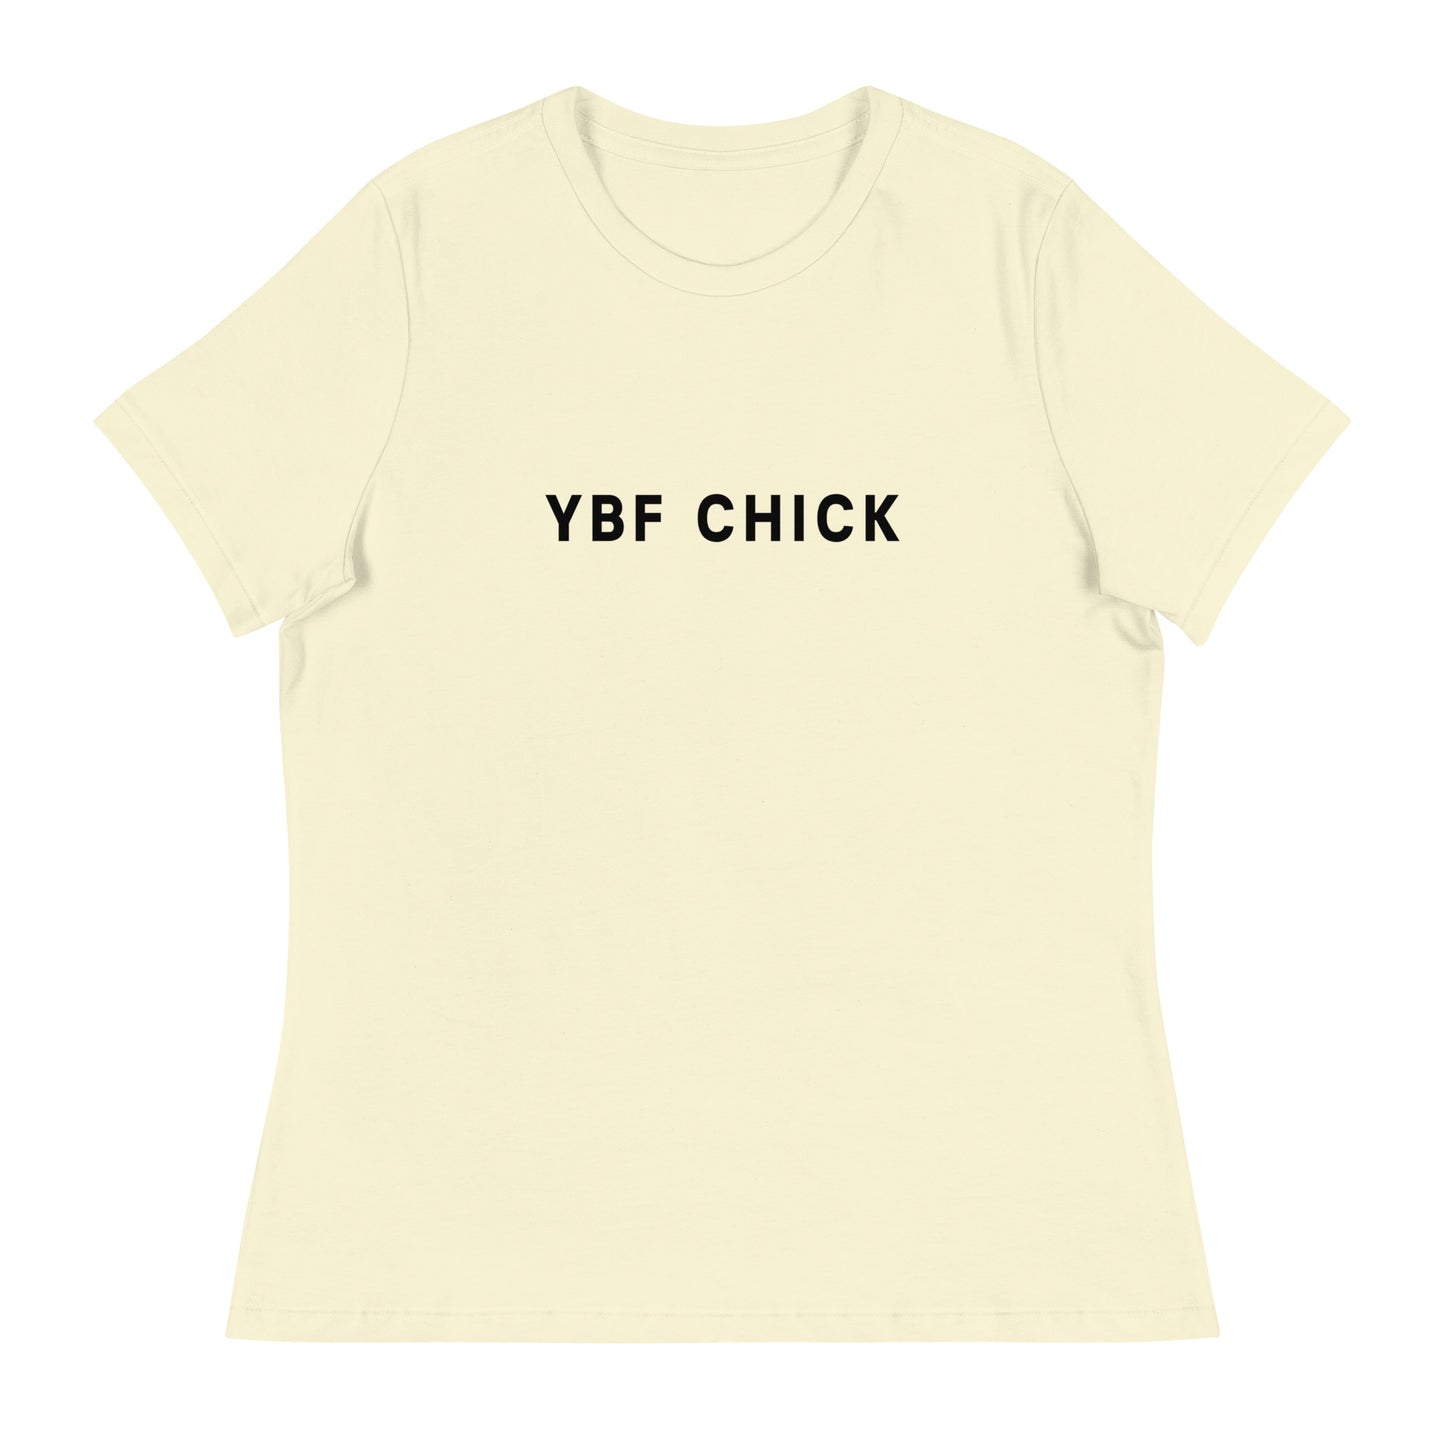 The Signature YBF Chick Tee